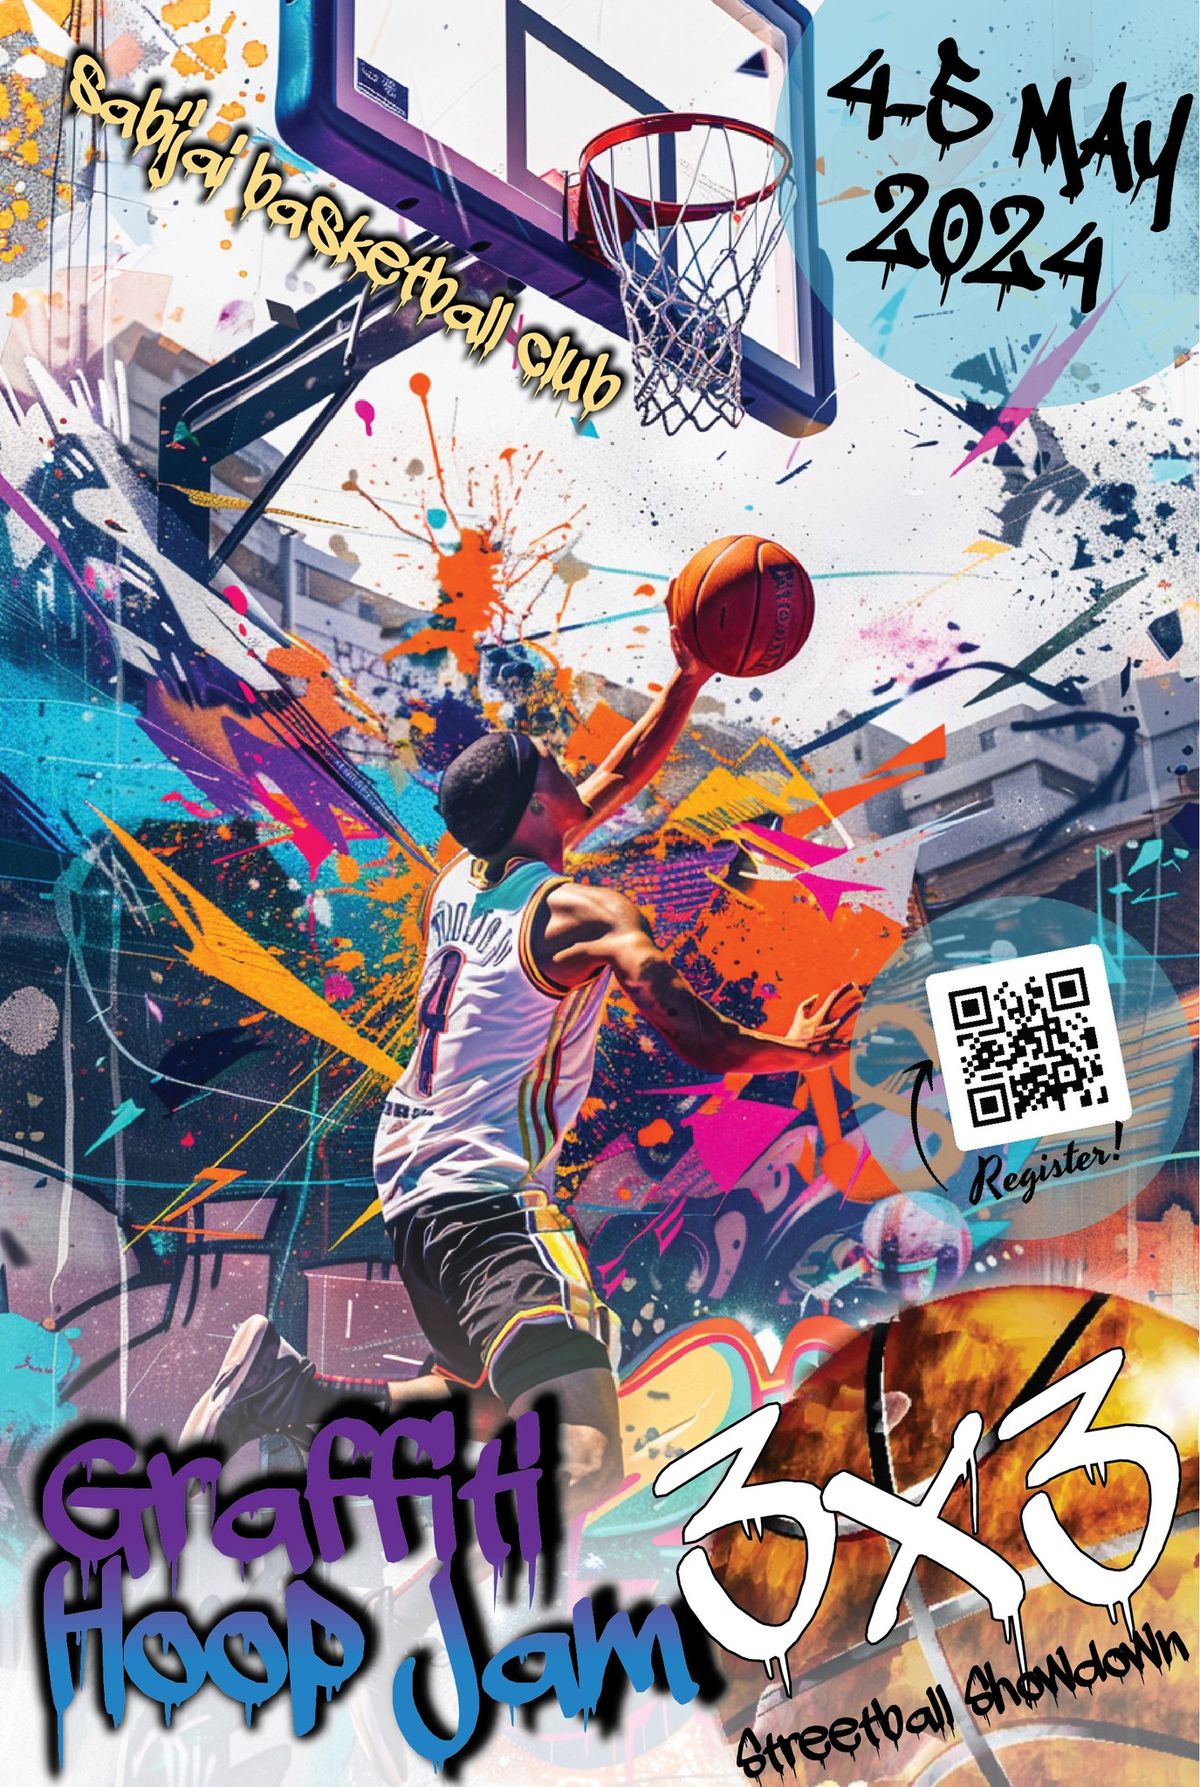 Graffiti Hoop Jam: 3X3 Streetball Showdown